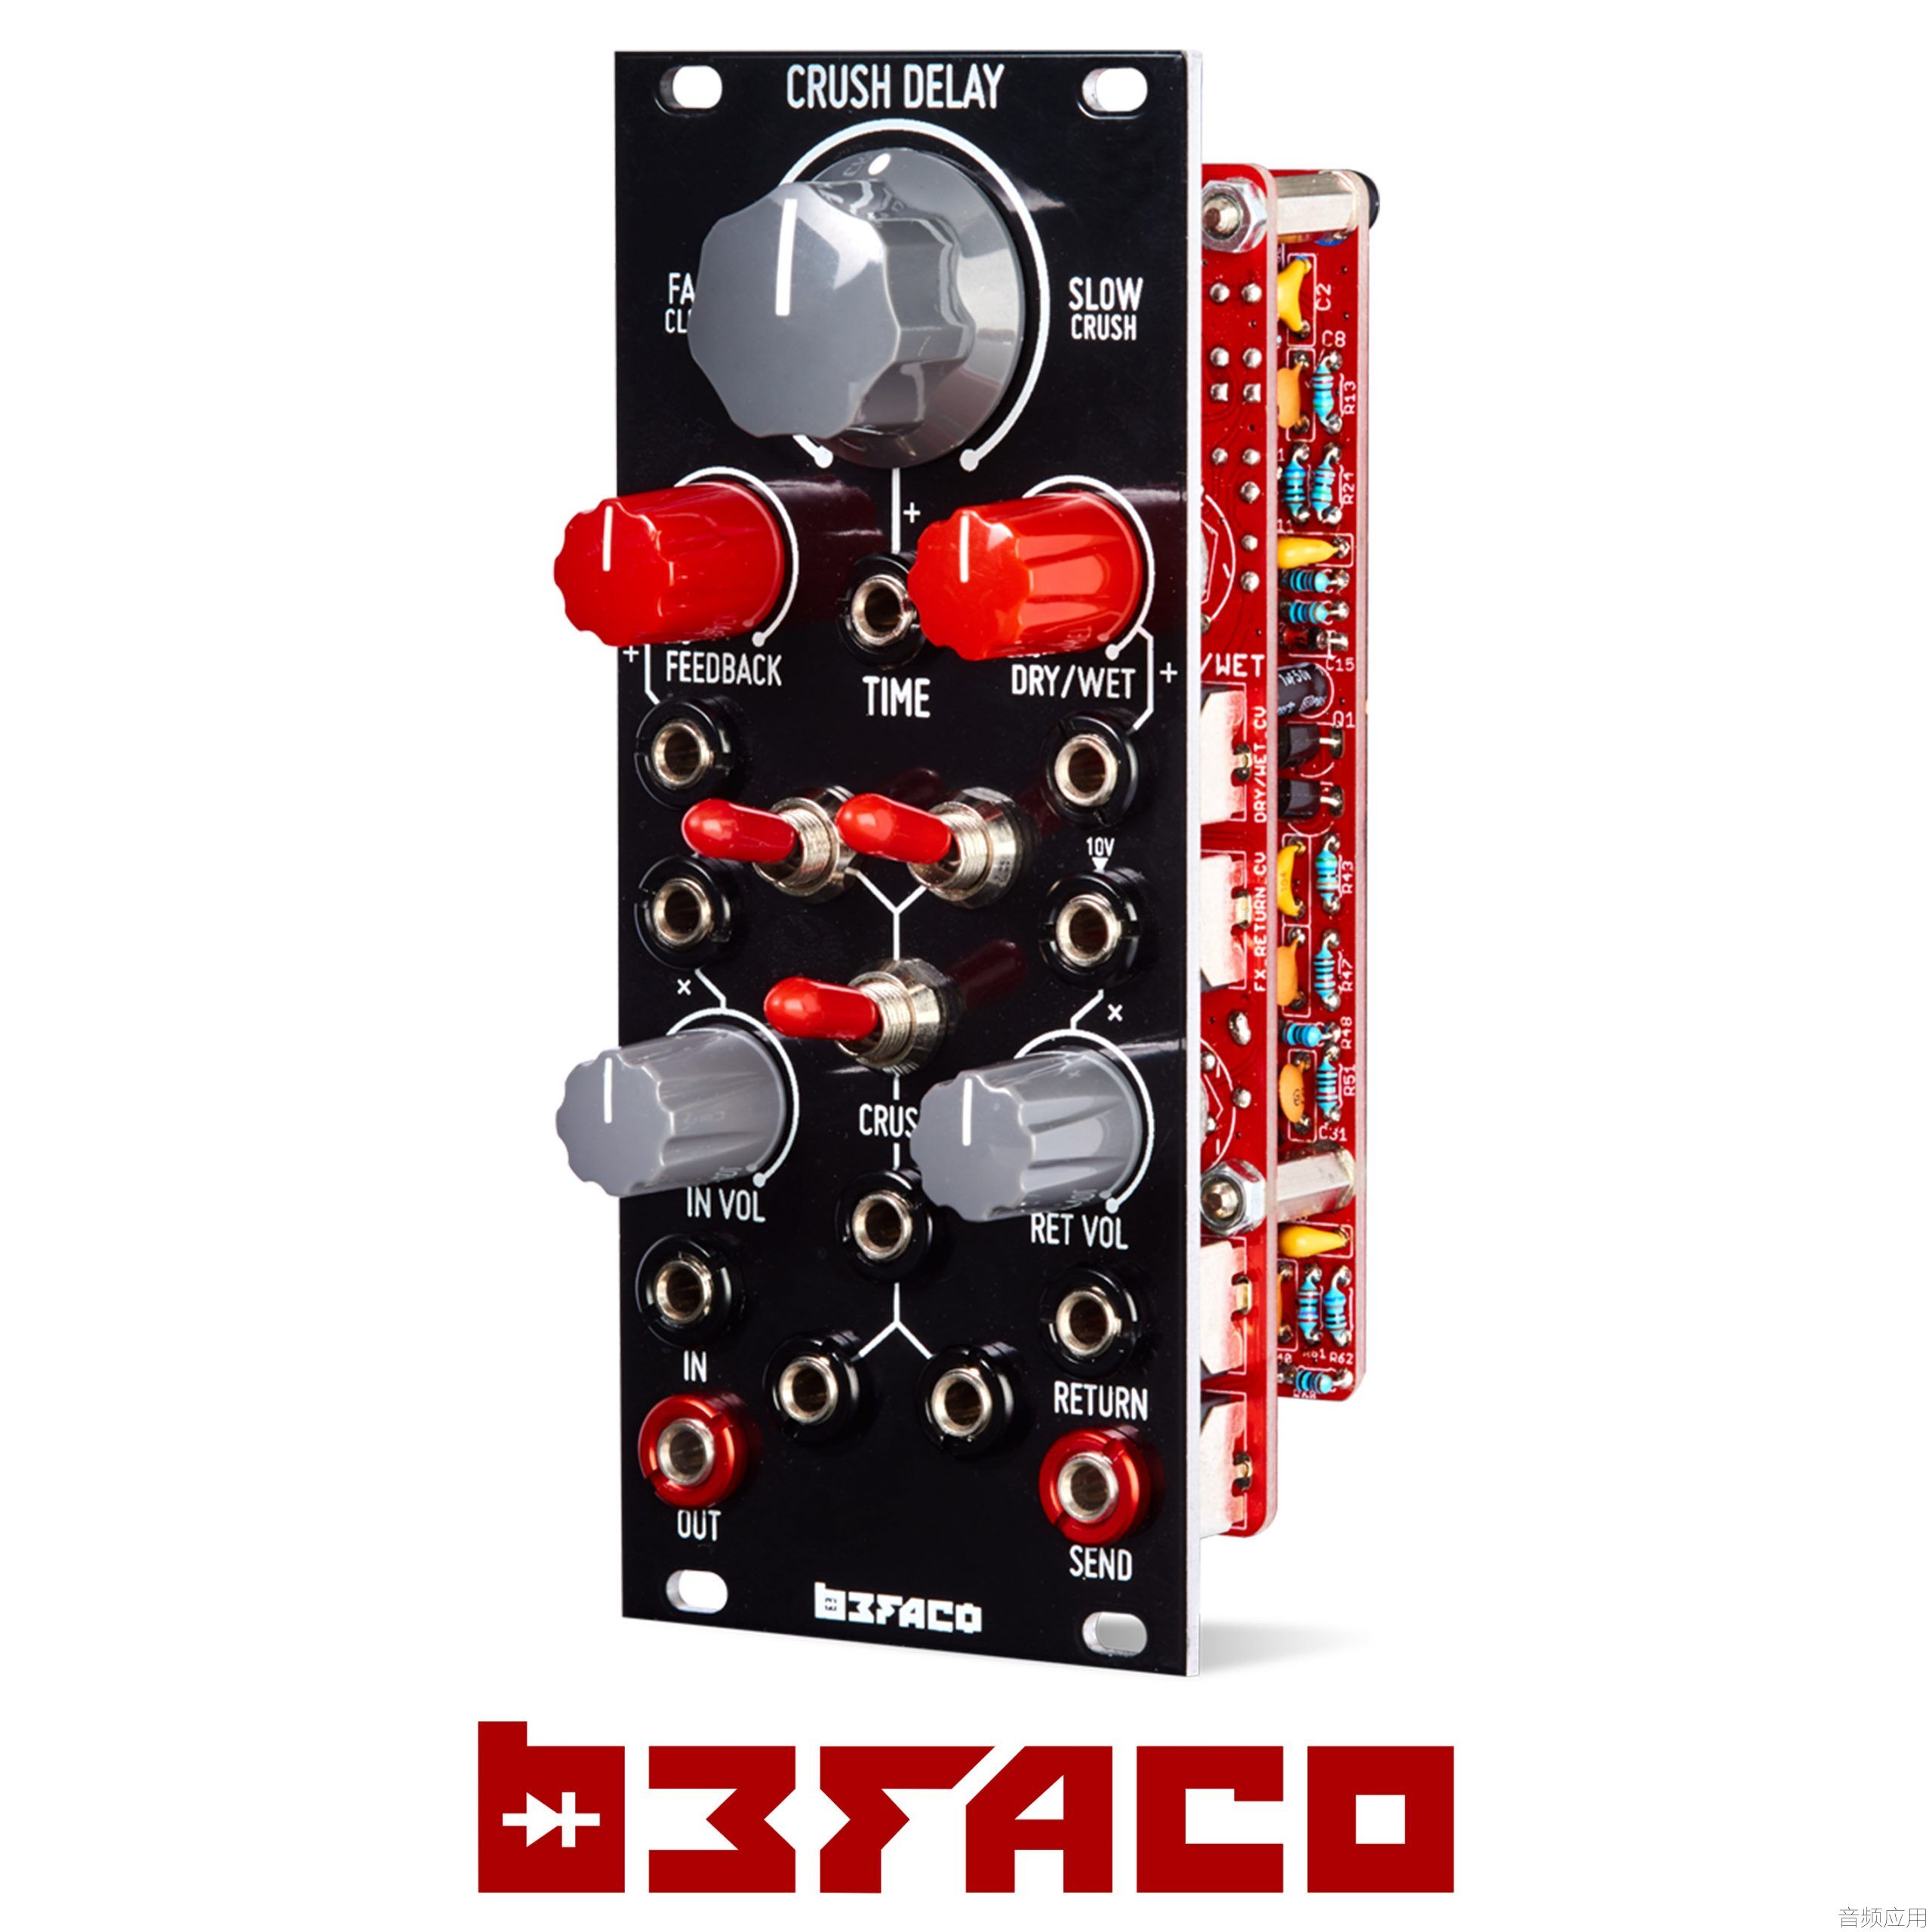 befaco20-crushdelay-product-scaled.jpg